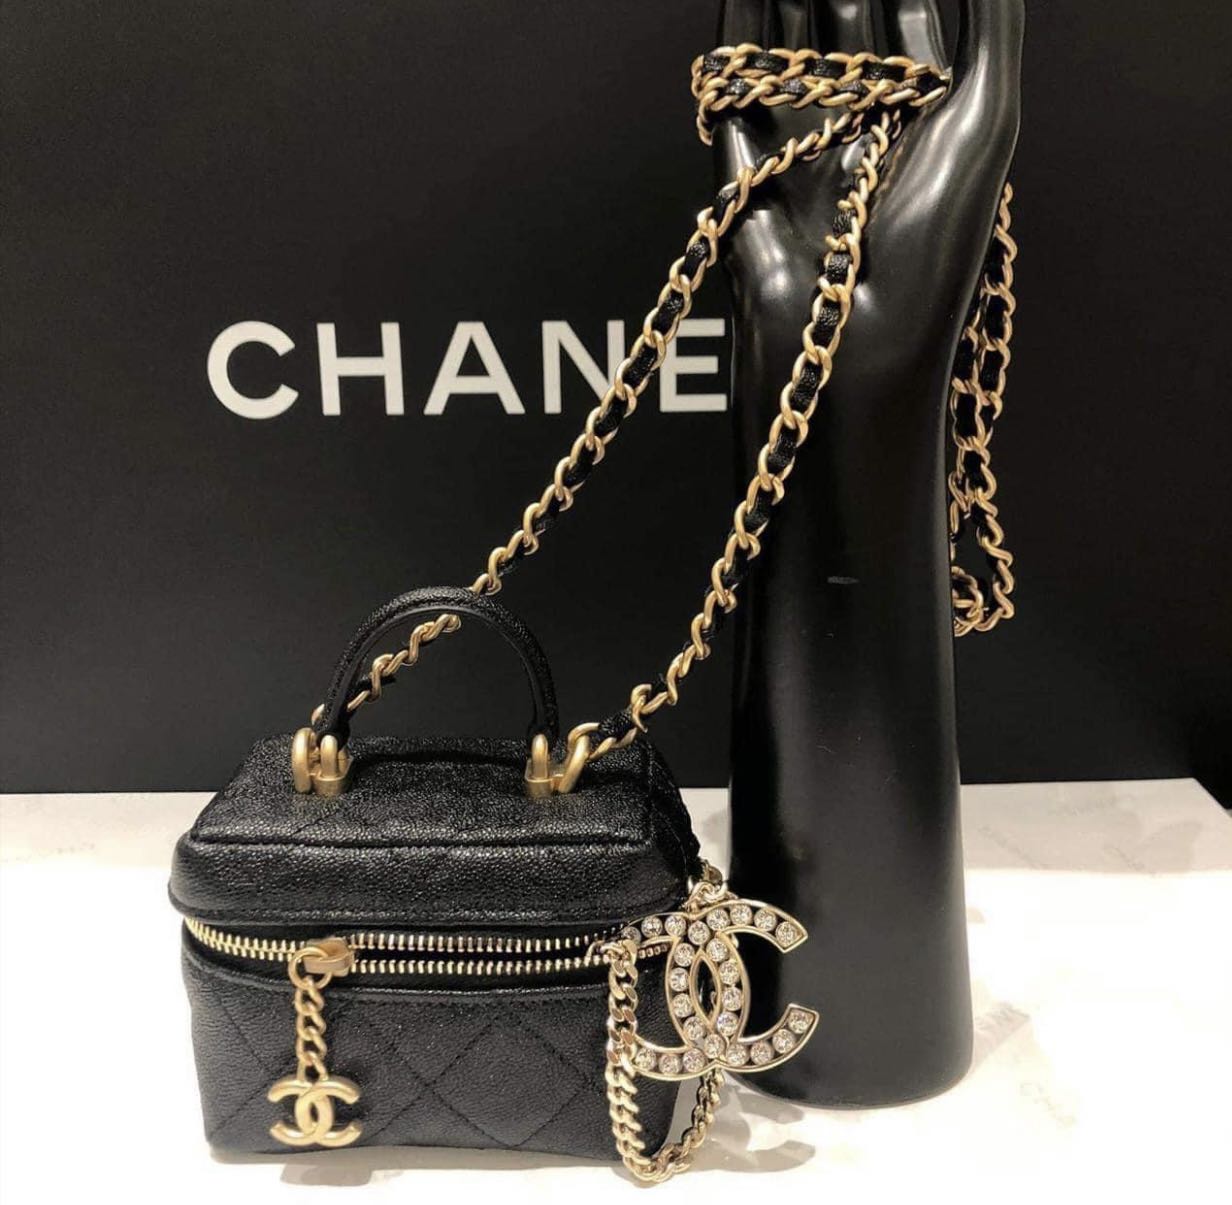 Chanel small Vanity With chain, mini top Handle Caviar bag, Super